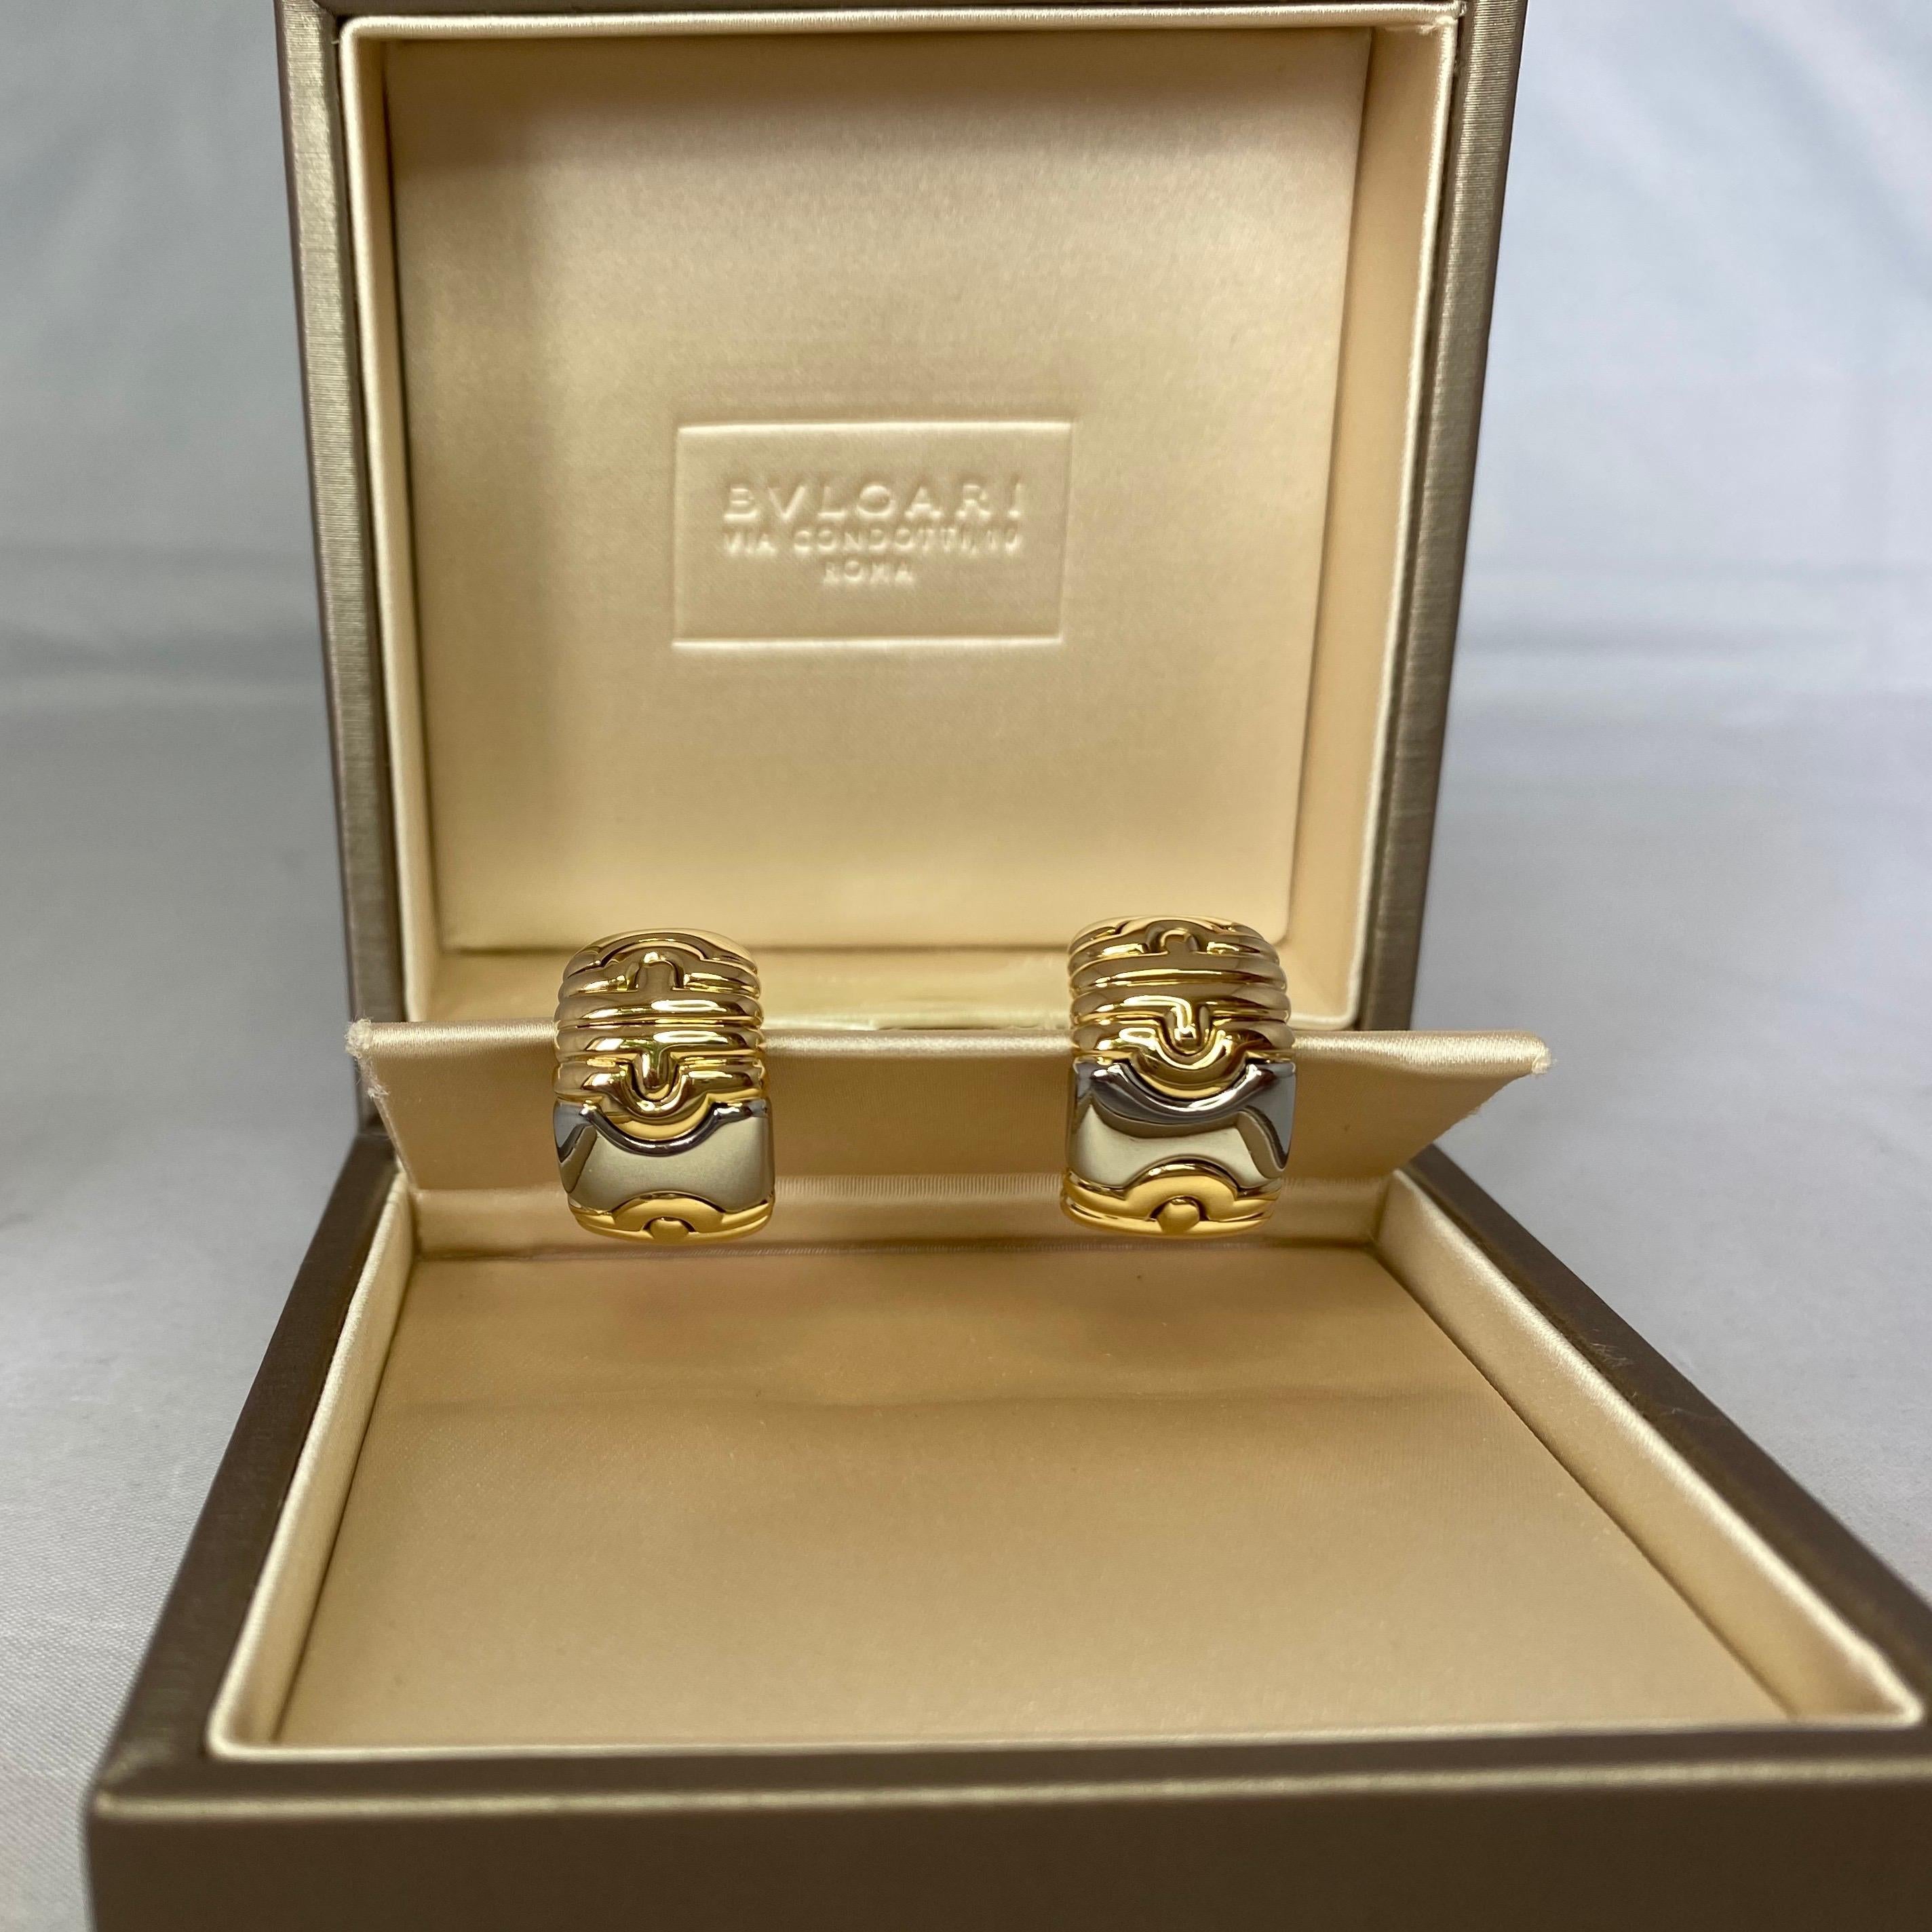 Art Deco Bvlgari Bulgari Parentesi 18 Karat White And Yellow Gold Clip-On Earrings in Box